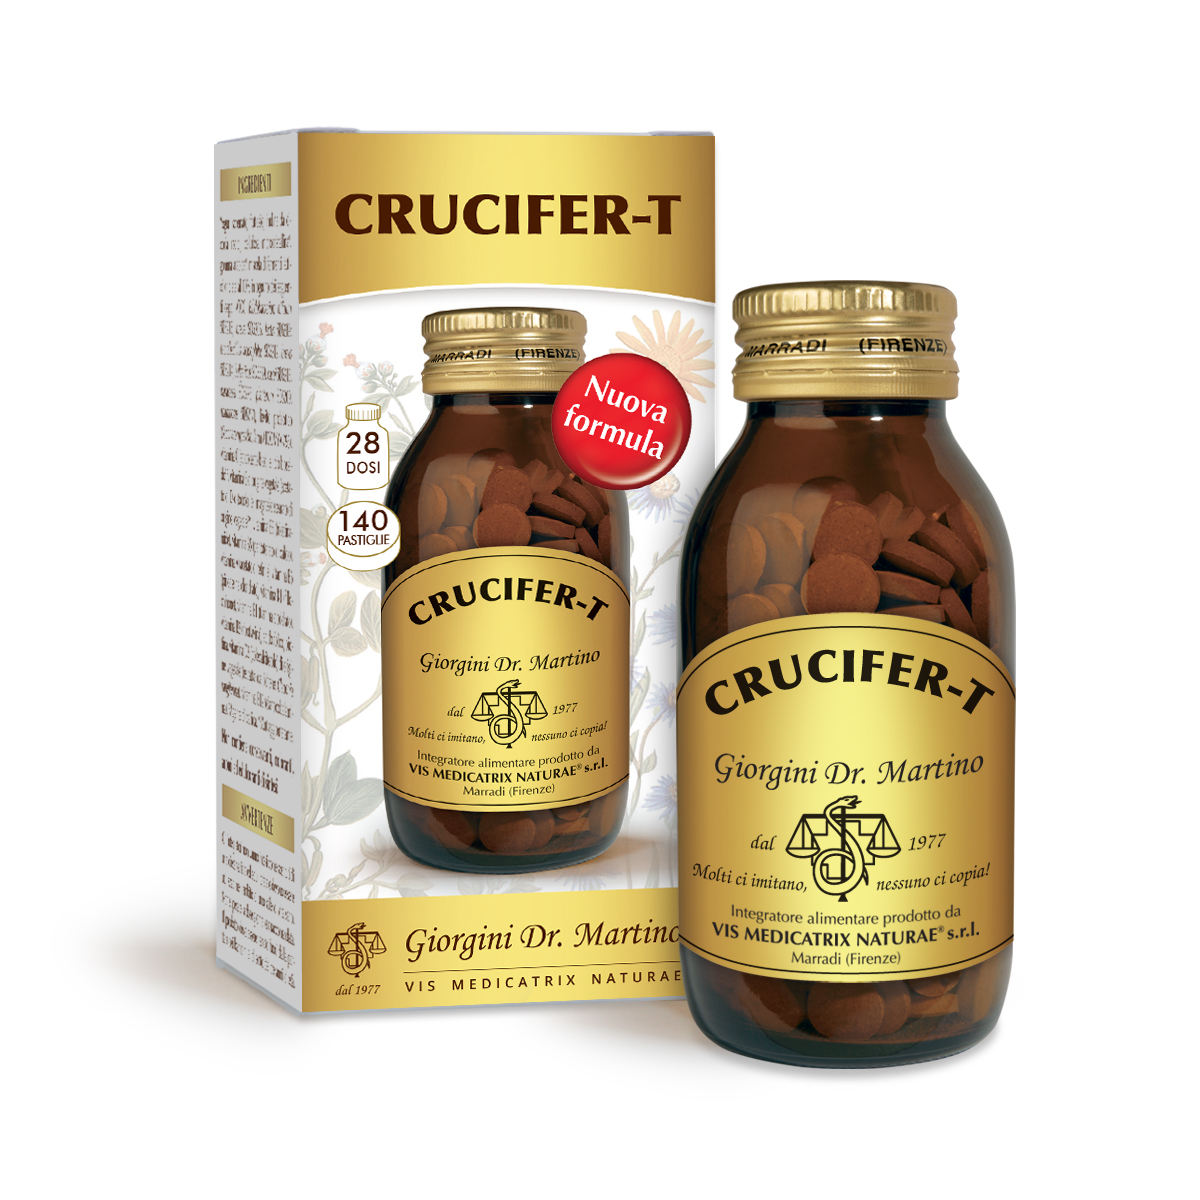 CRUCIFER-T 70 g - 140 tablets of 500 mg each